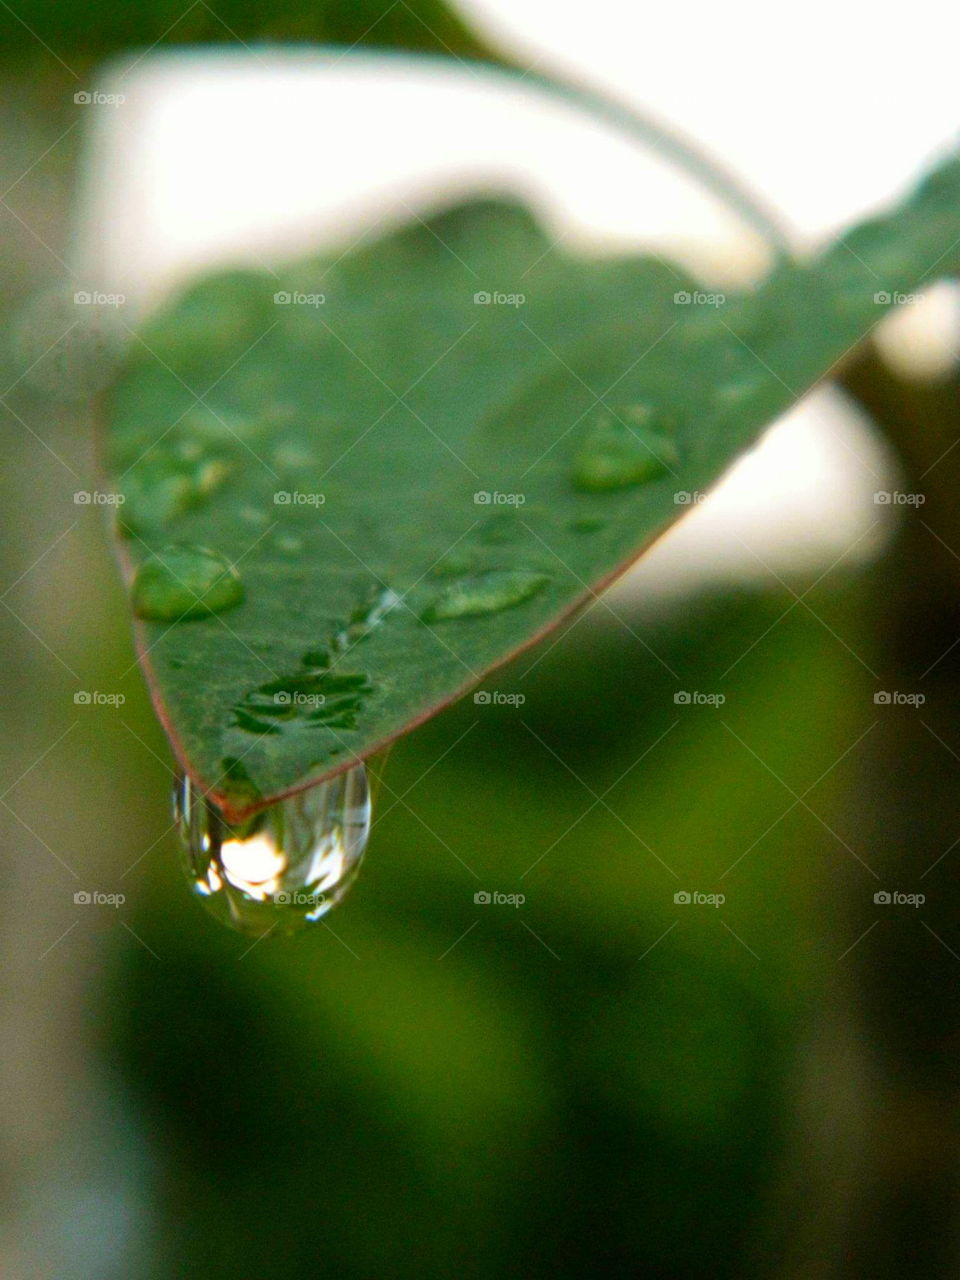 Water droplet on a plumeria leaf